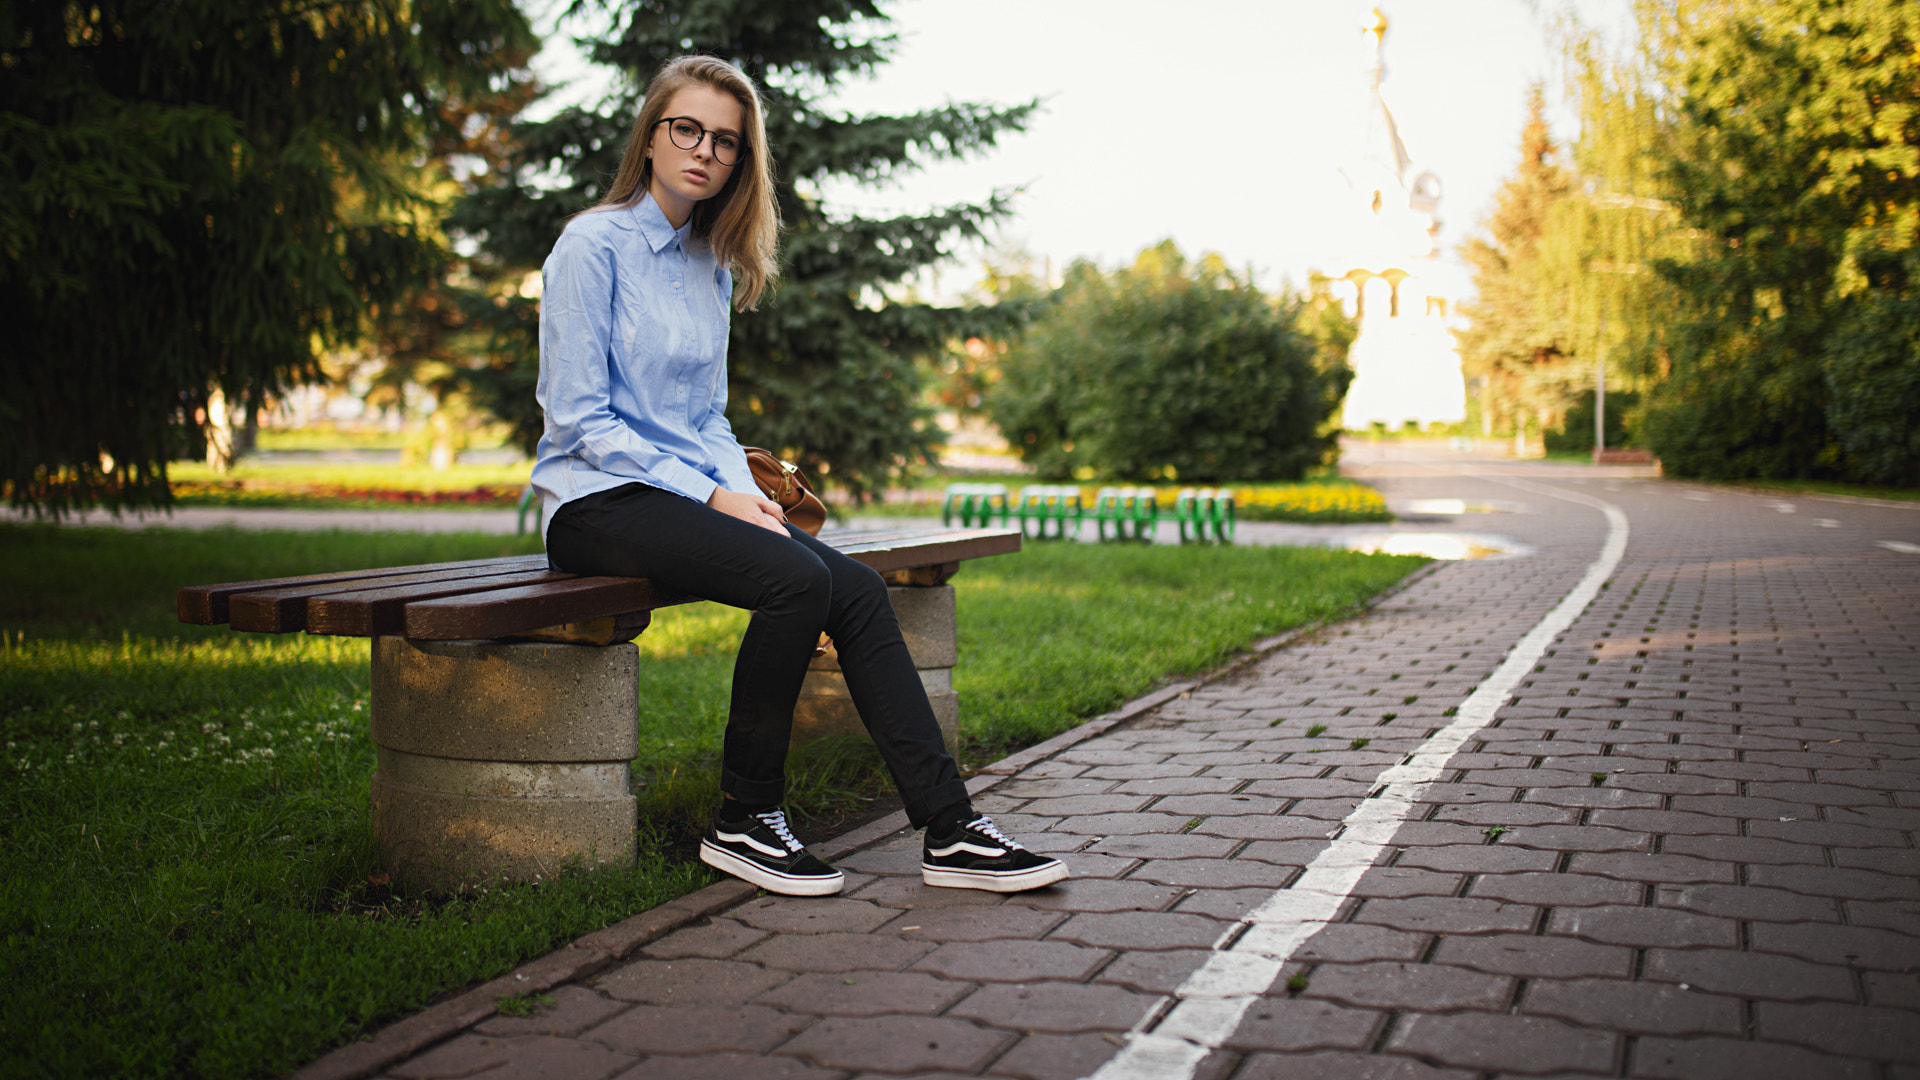 Women Bench Sneakers Sergey Fat Jeans Women Outdoors Women With Glasses Shirt Park Sitting Ksenija K 1920x1080